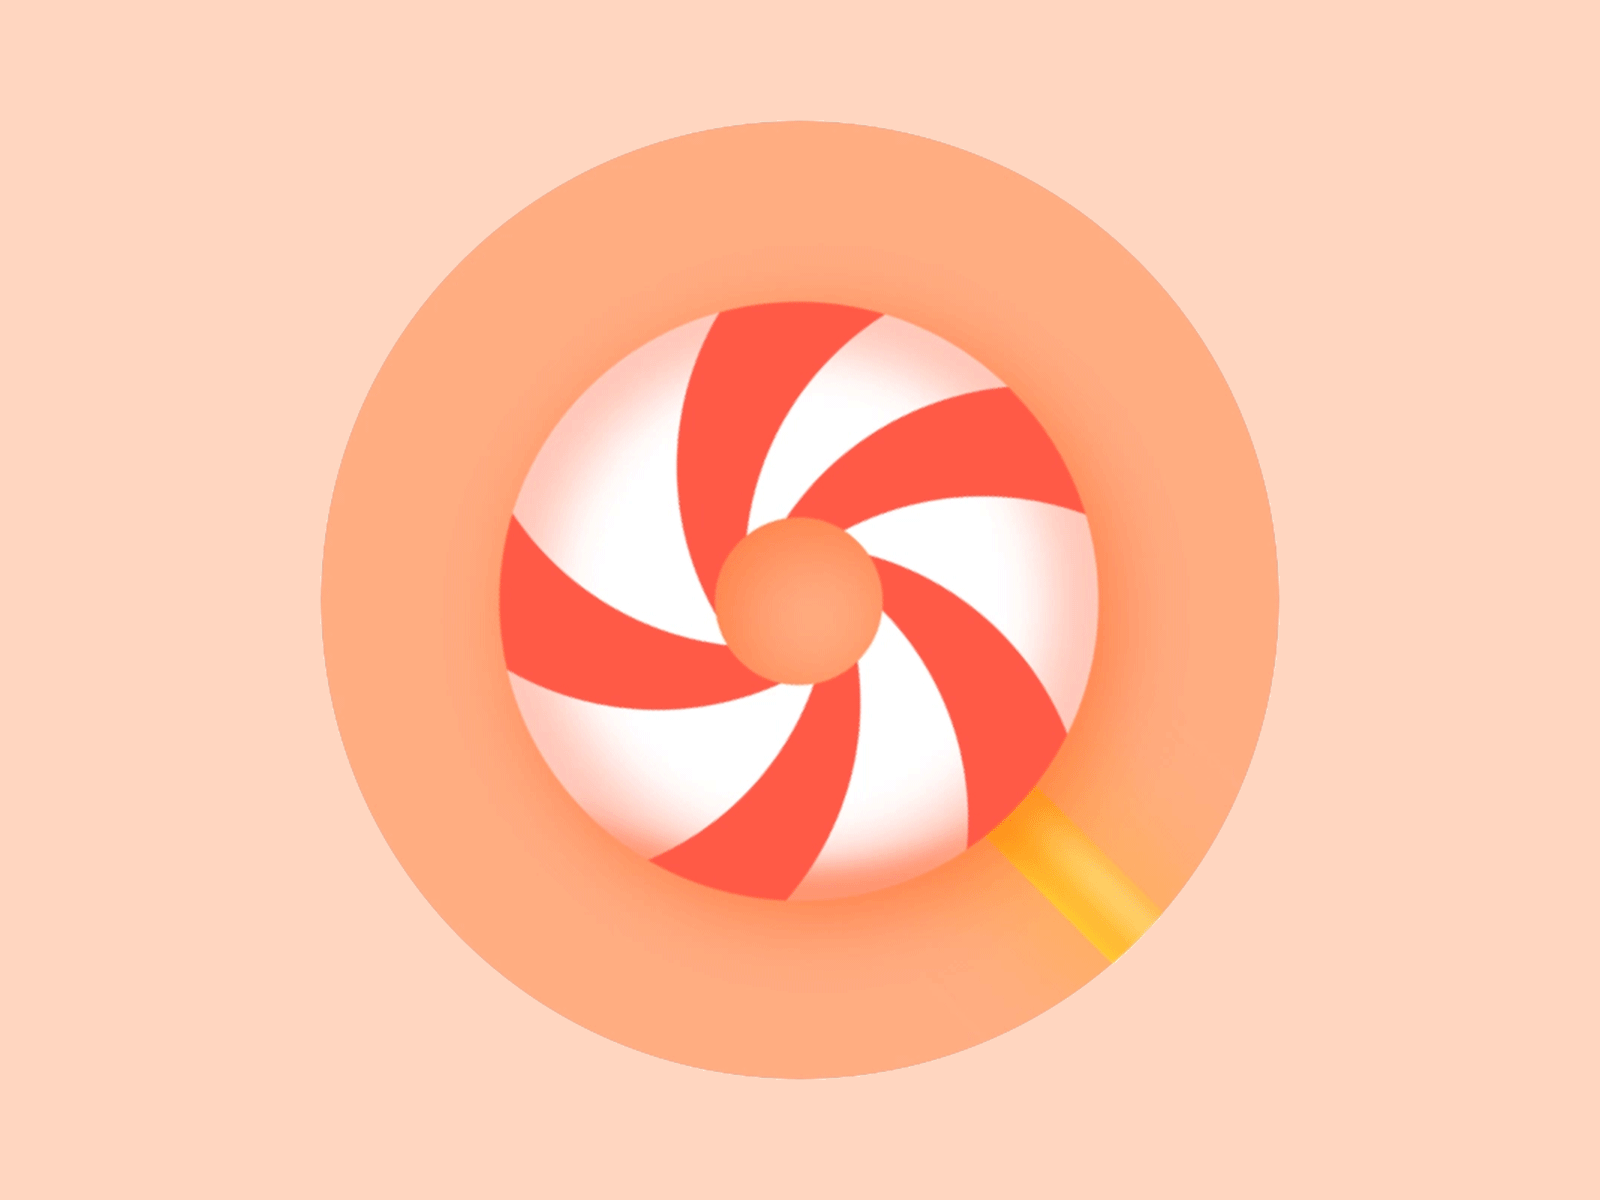 Dynamic effect of lollipop illustration